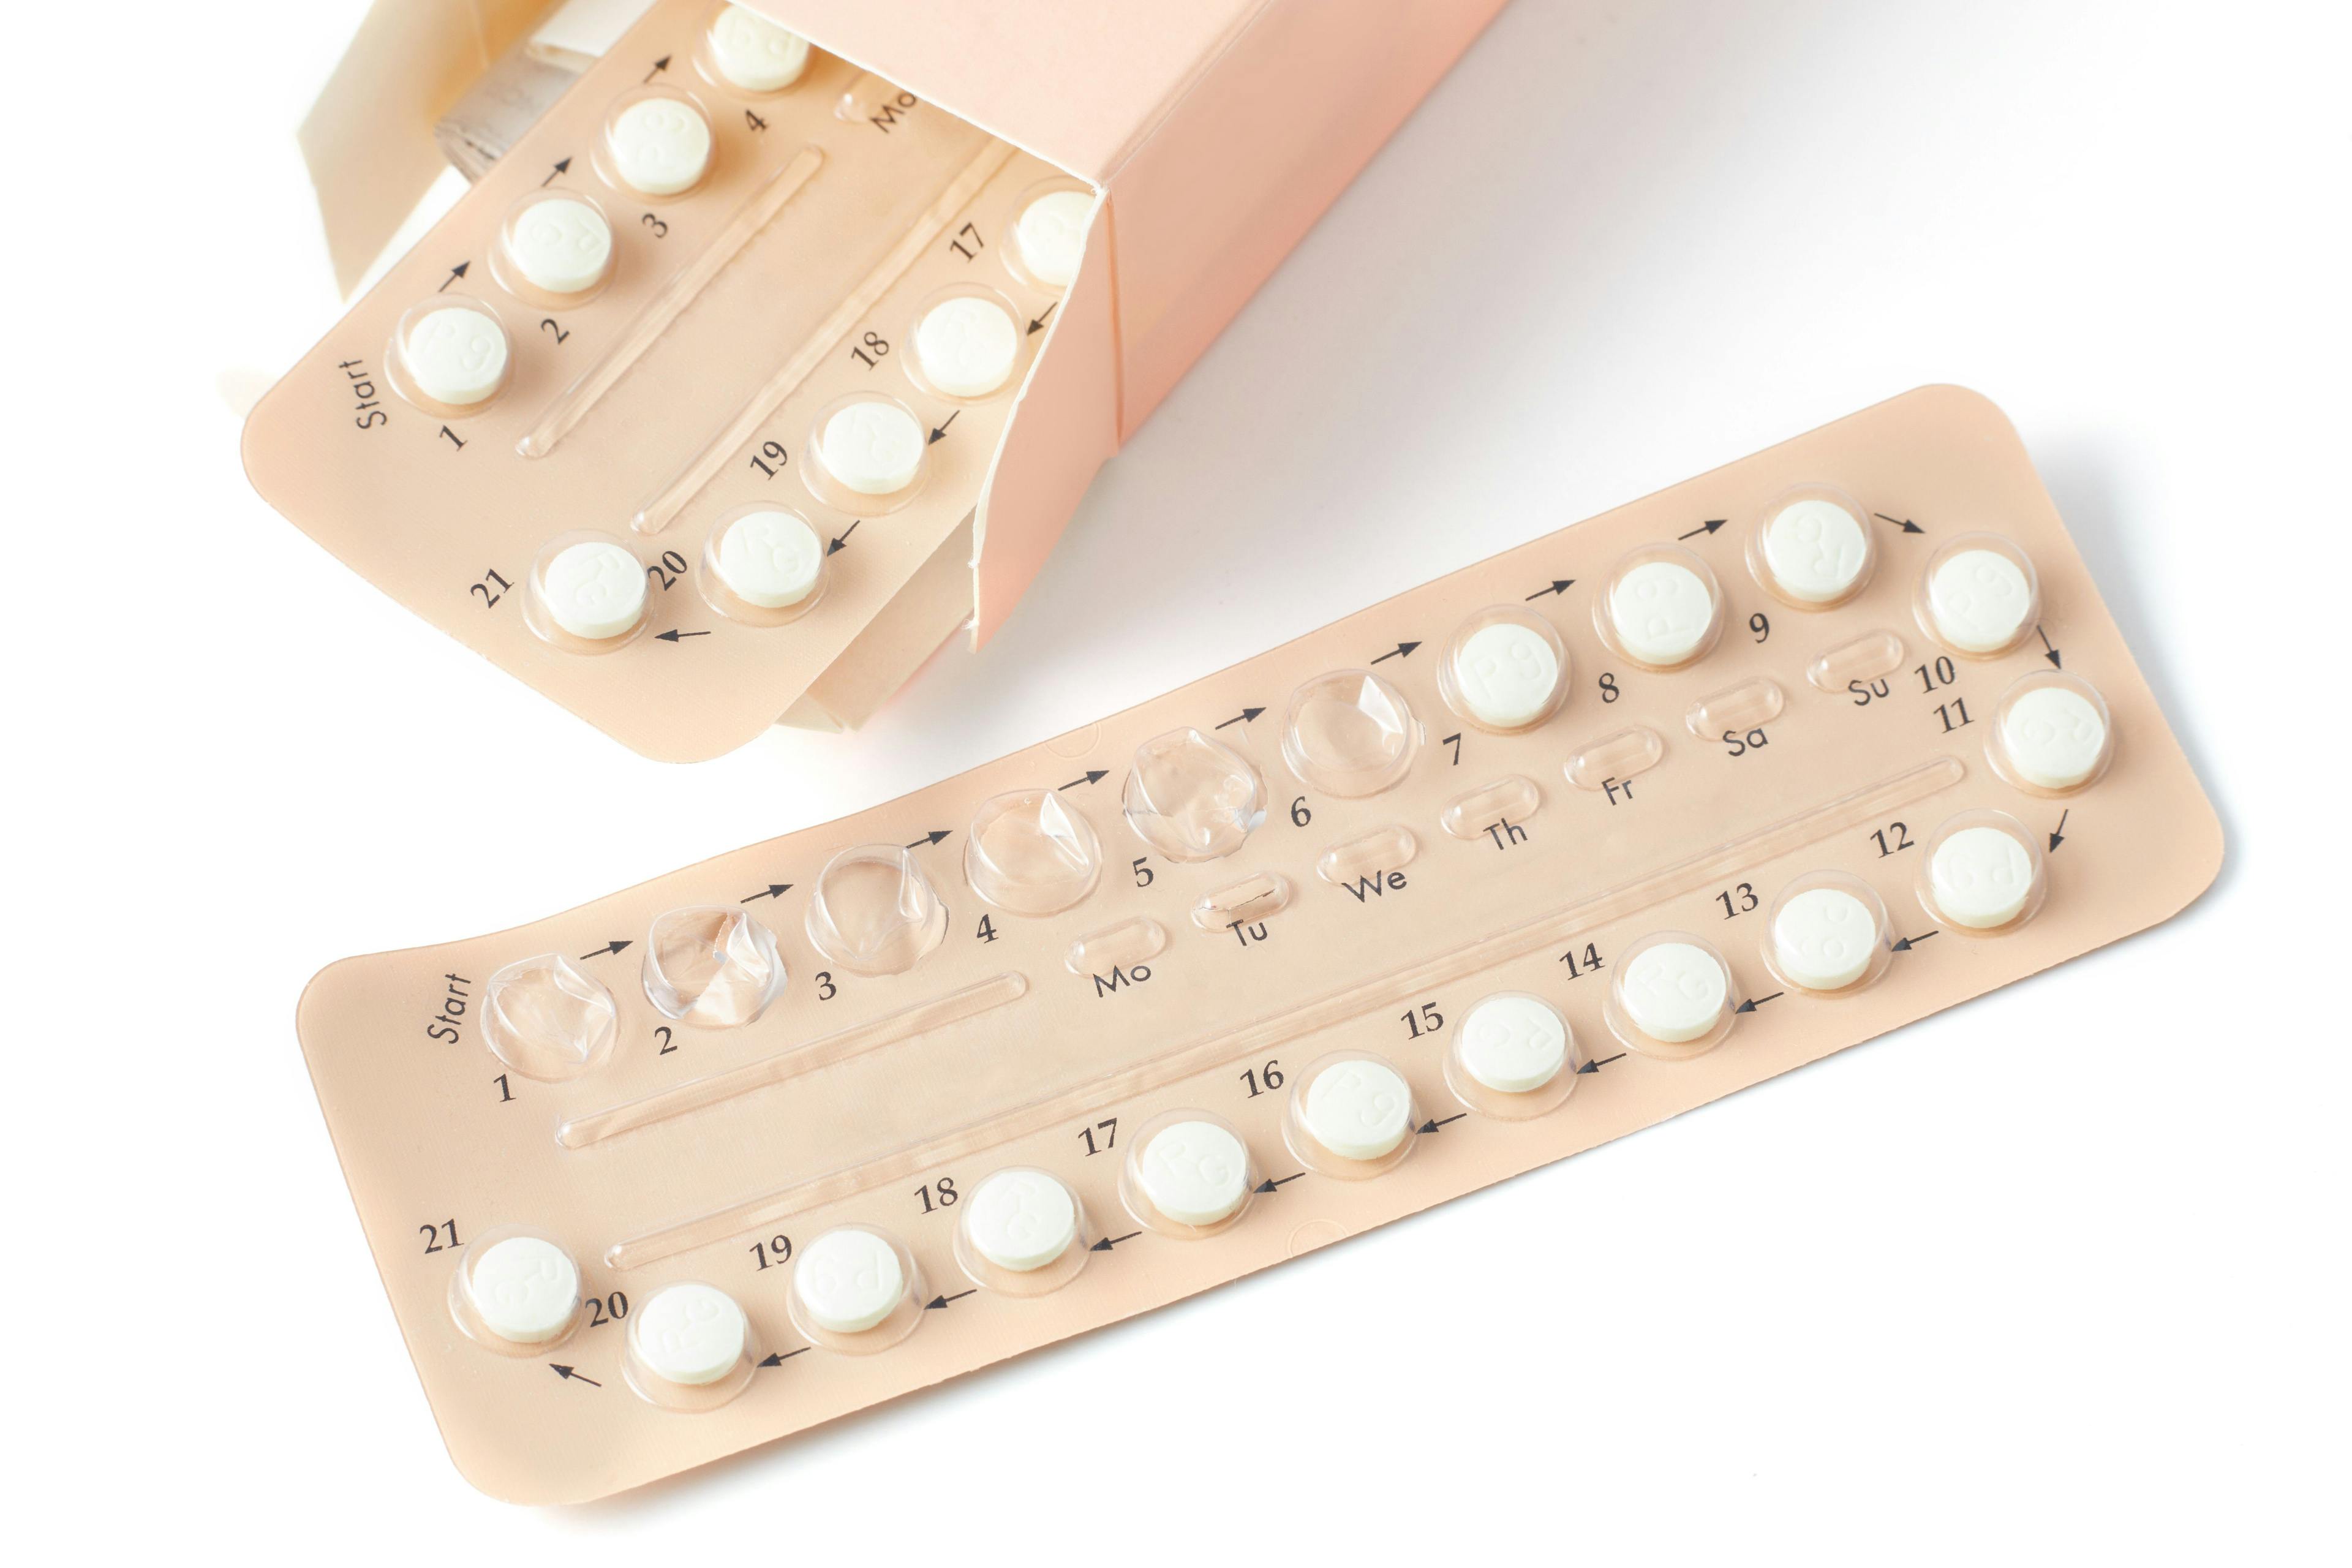 Oral contraceptive pill strips / stas_malyarevsky - stock.adobe.com